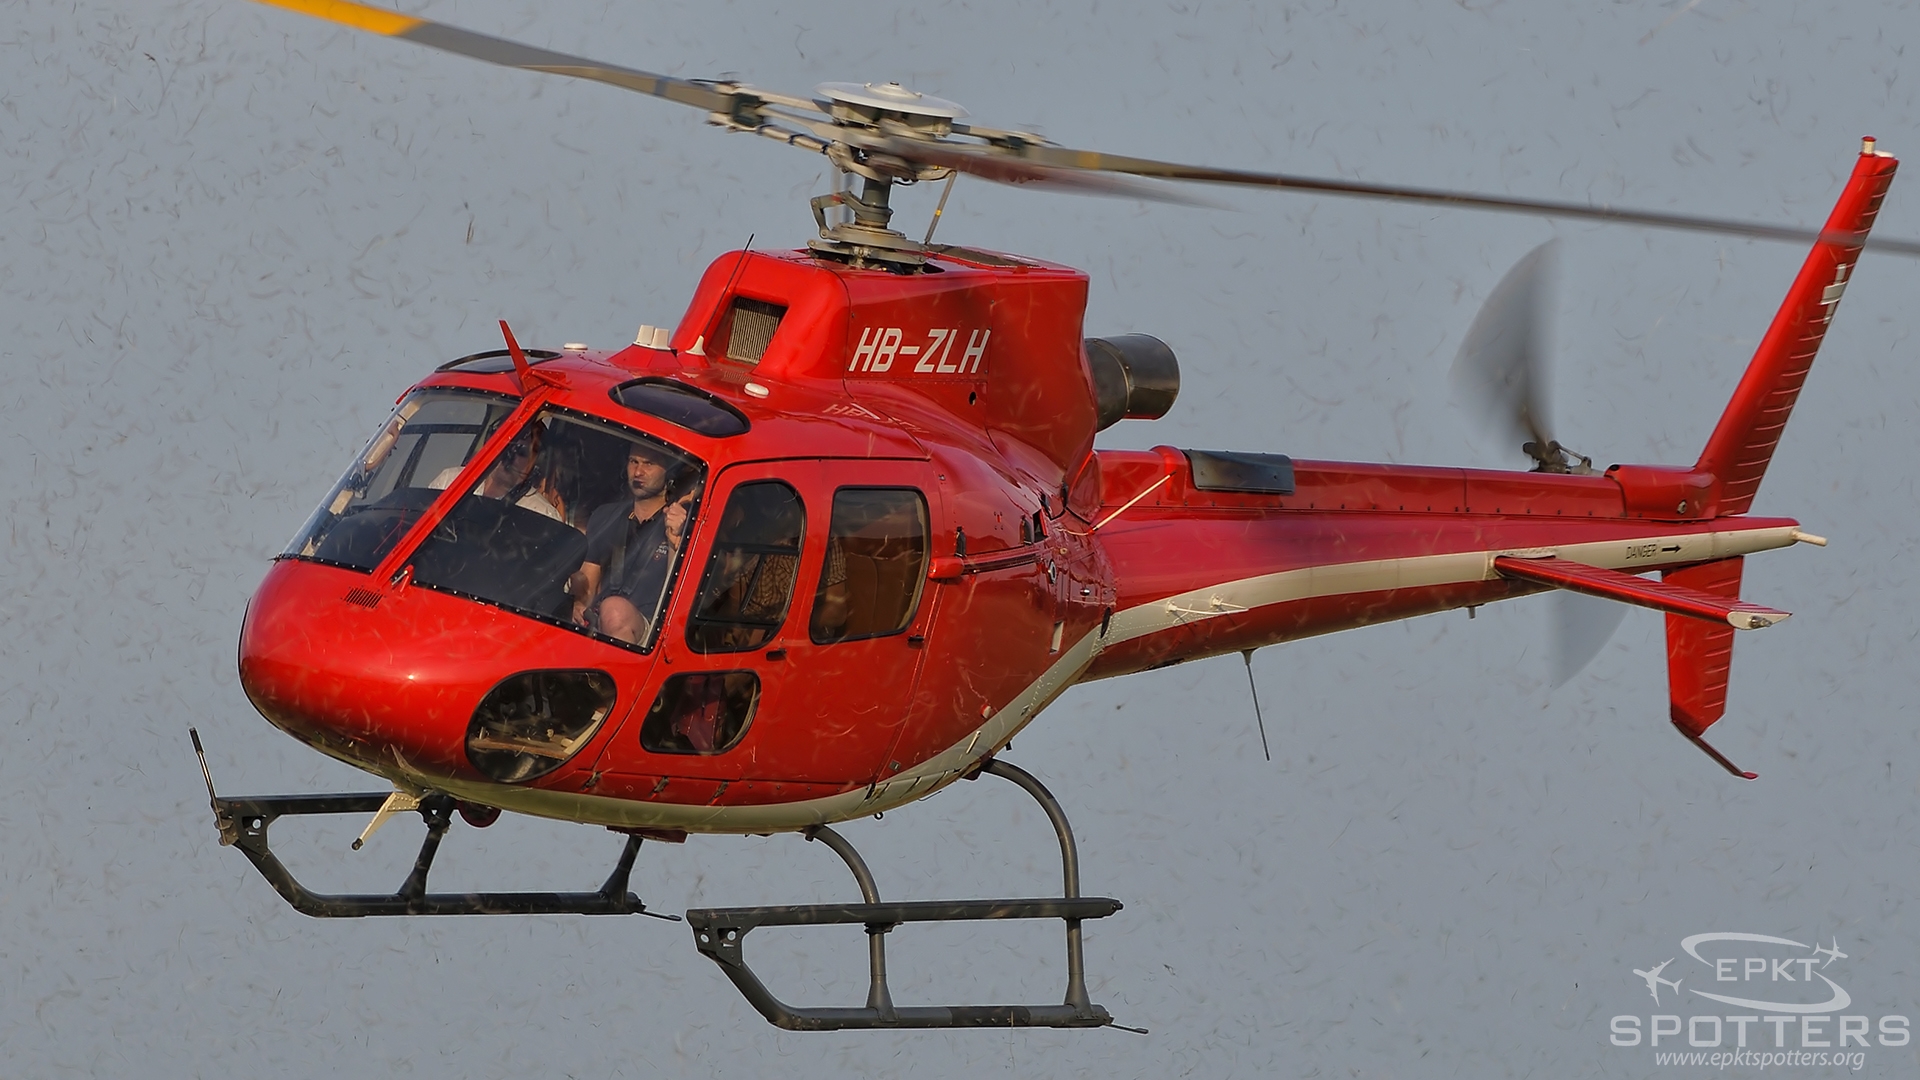 HB-ZLH - Eurocopter AS 350 B3 Ecureuil (LeadEx Ltd) / Gotartowice - Rybnik - Rybnik Poland [EPRG/]